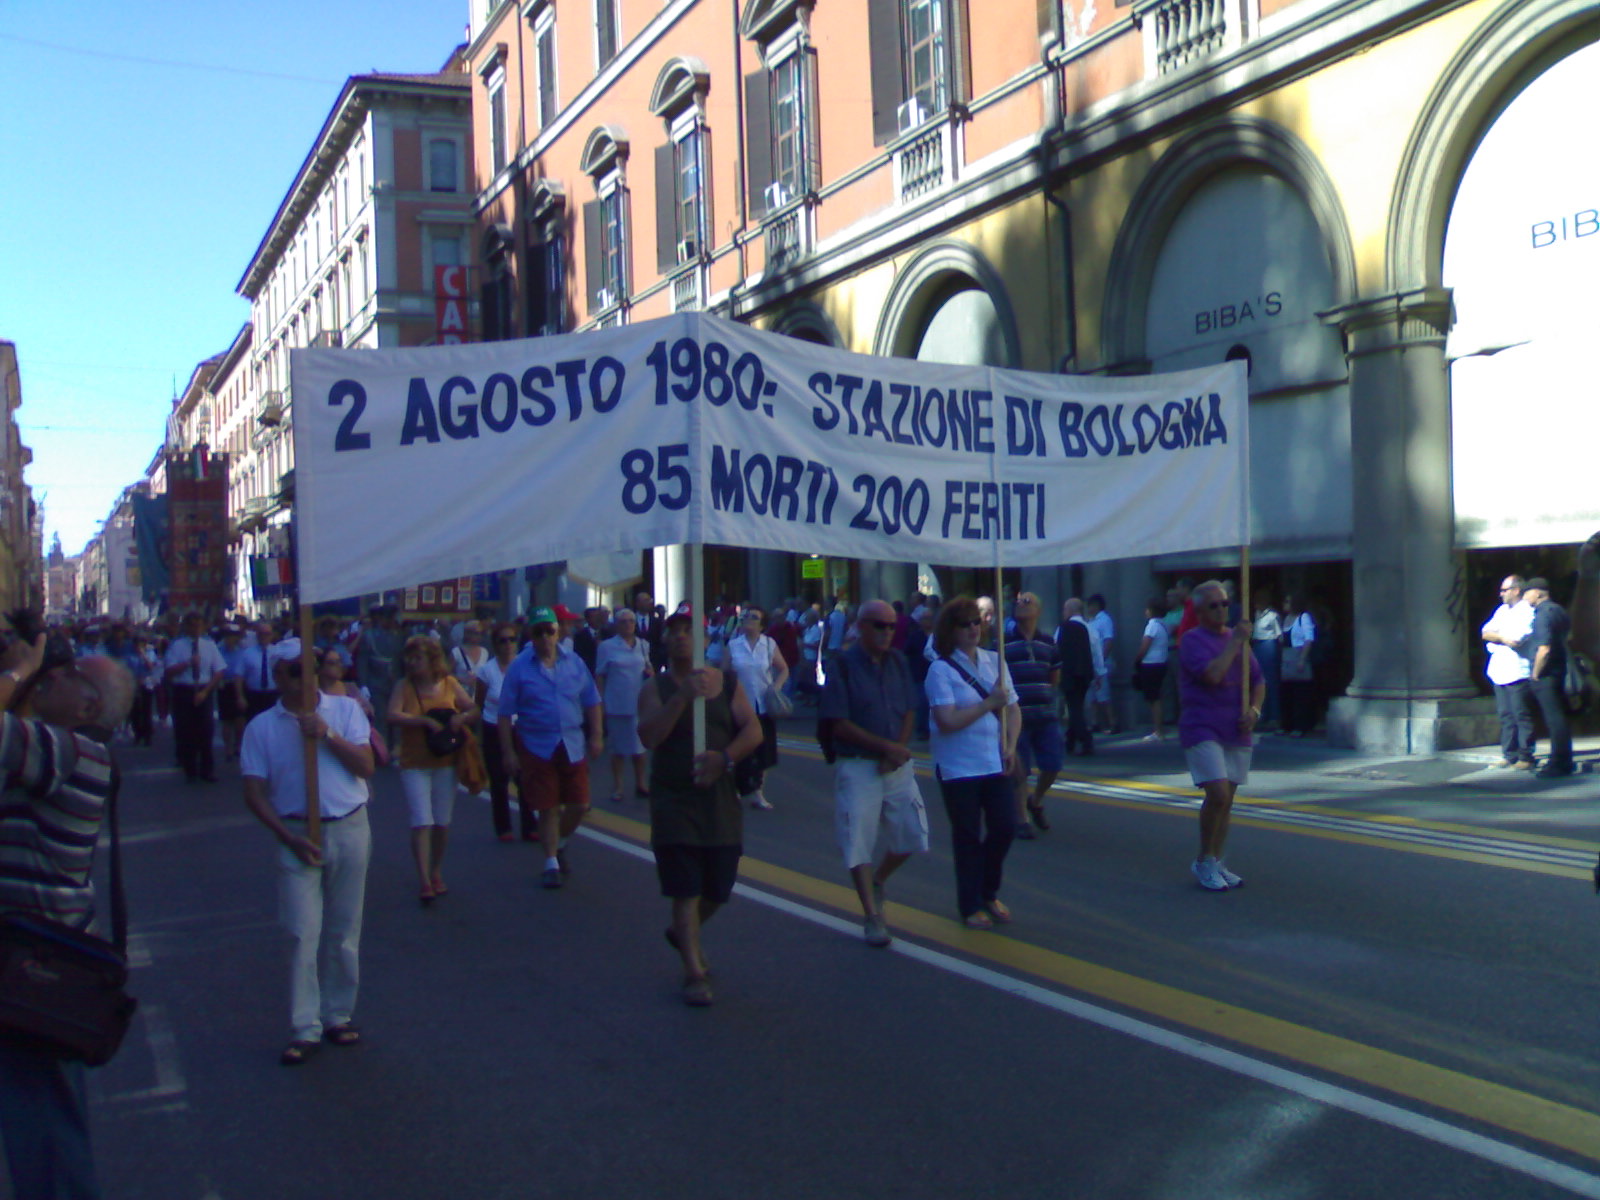 massacre of bologna - procession of demonstrators